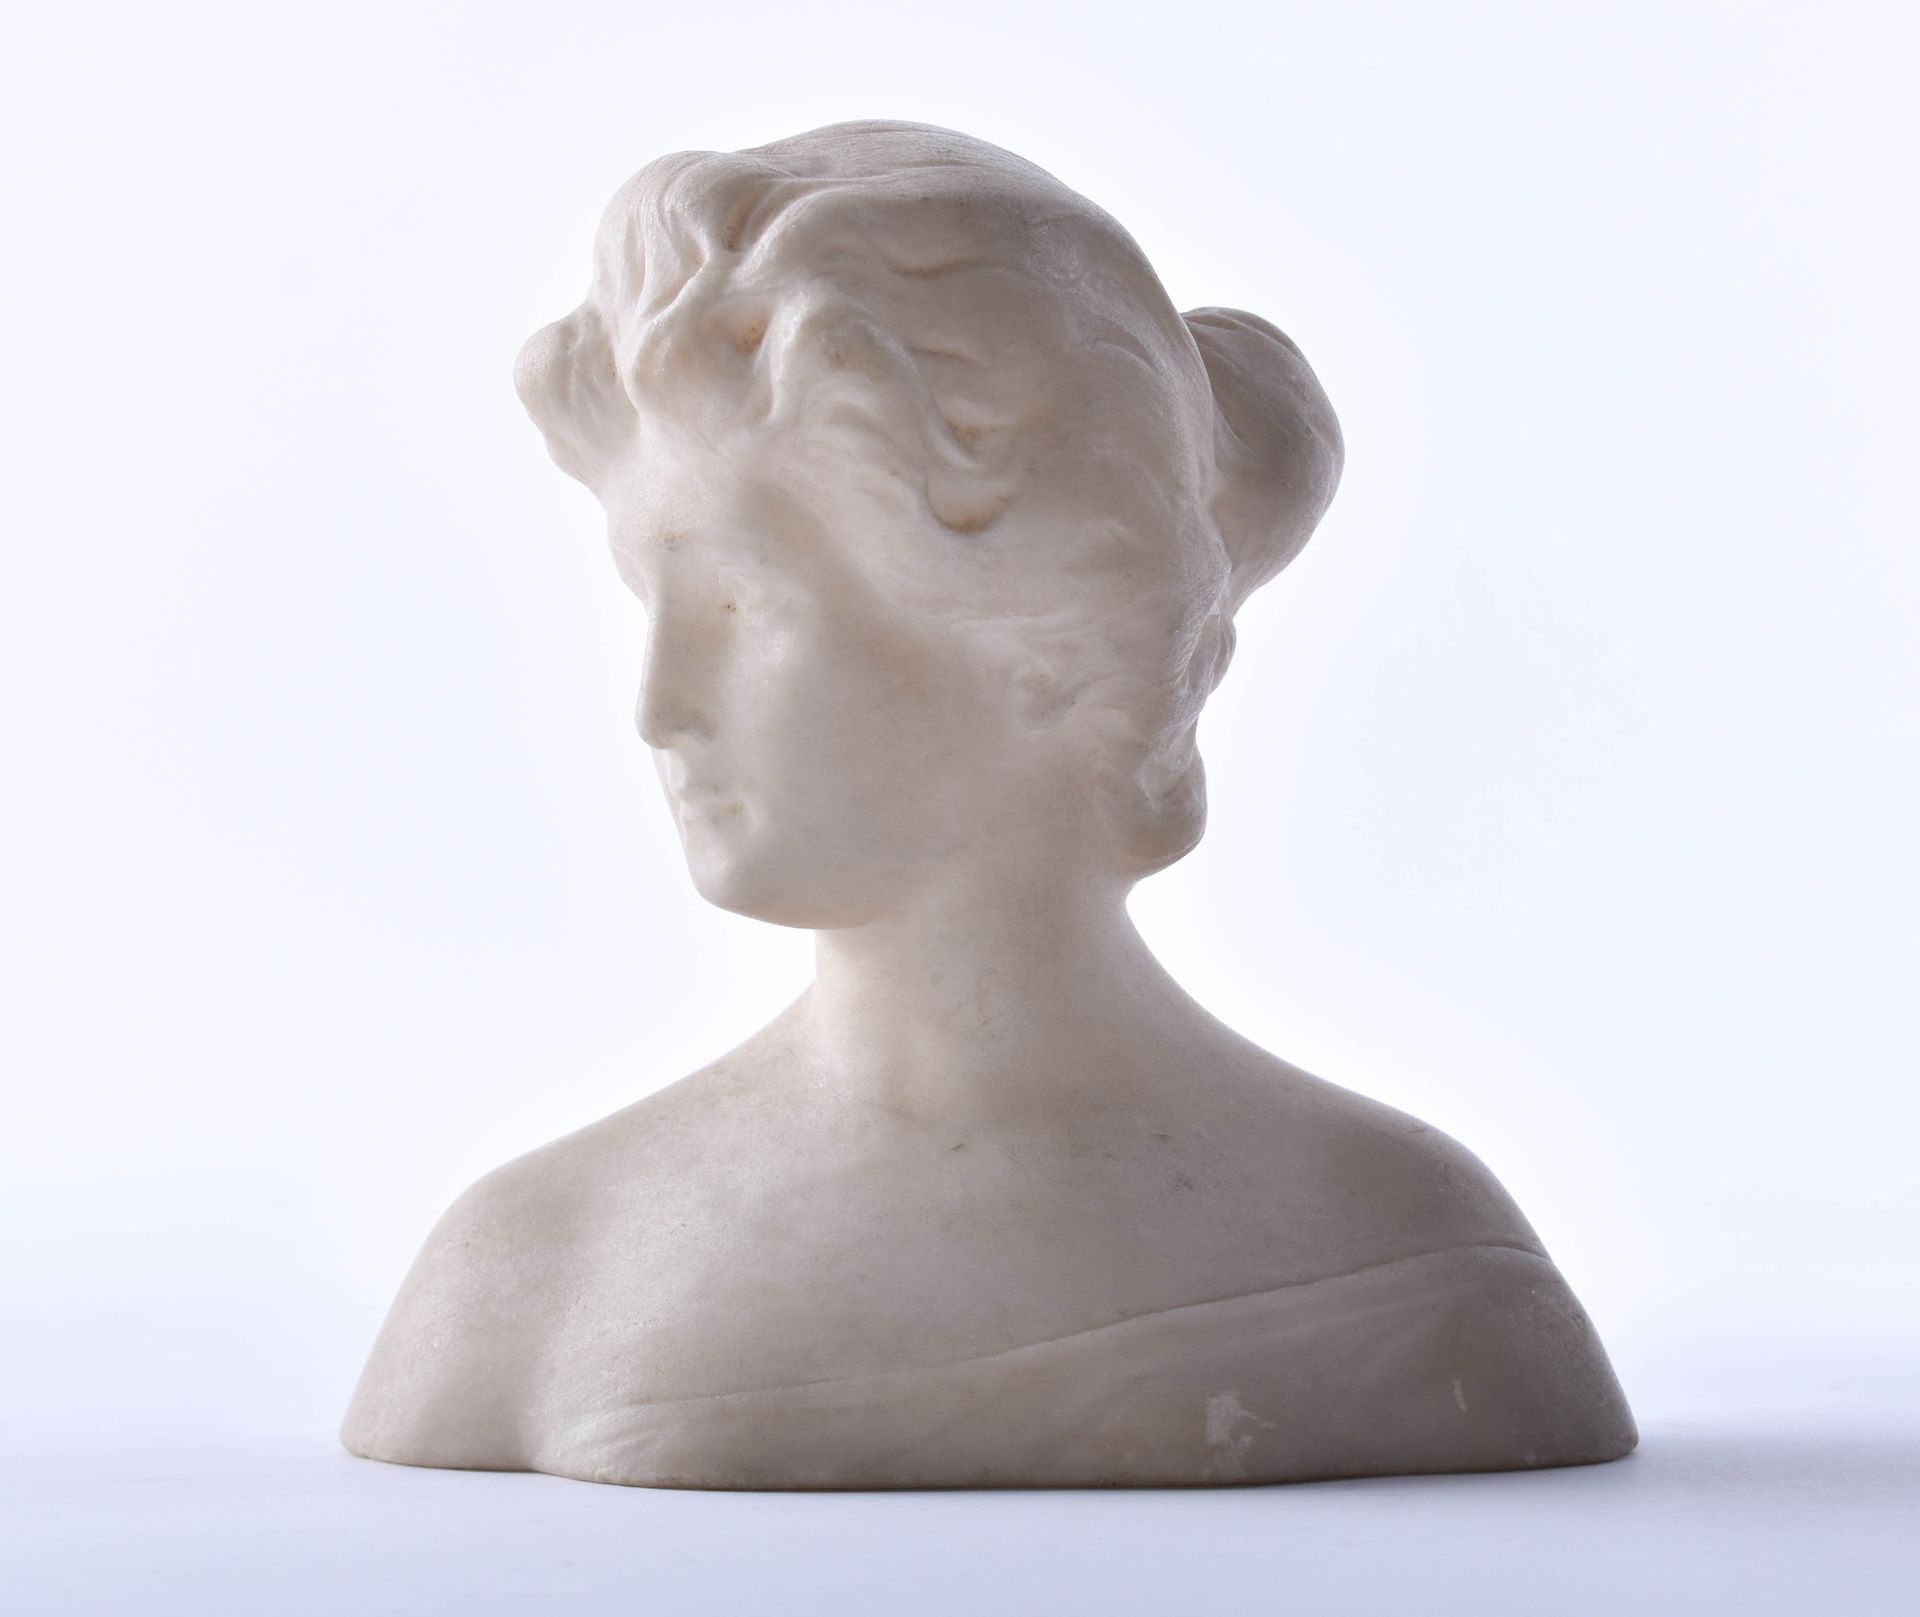 Jugendstilbüste um 1900 Buste de femmeMarbre, hauteur totale 11 cm